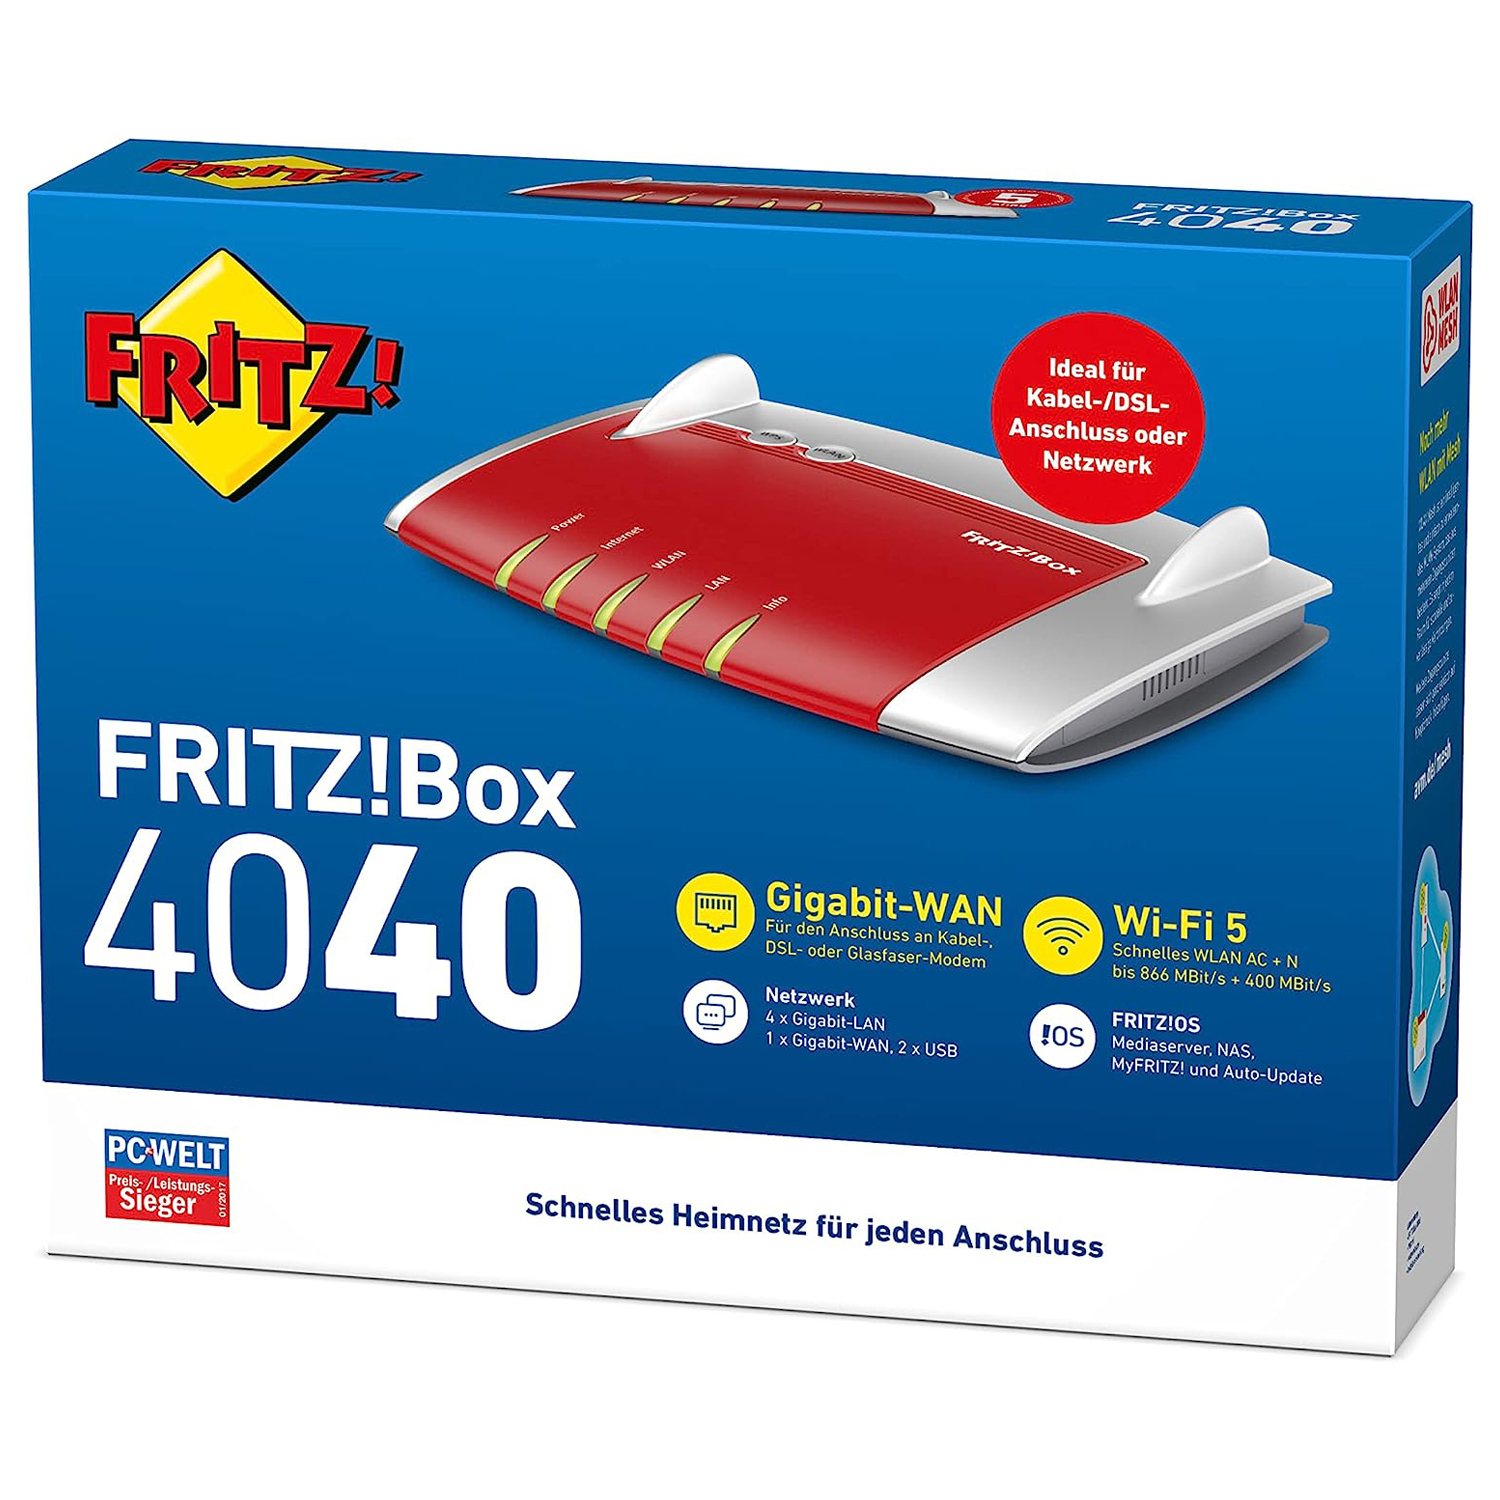 Fritz!Box 4040 EDV Fleidl –